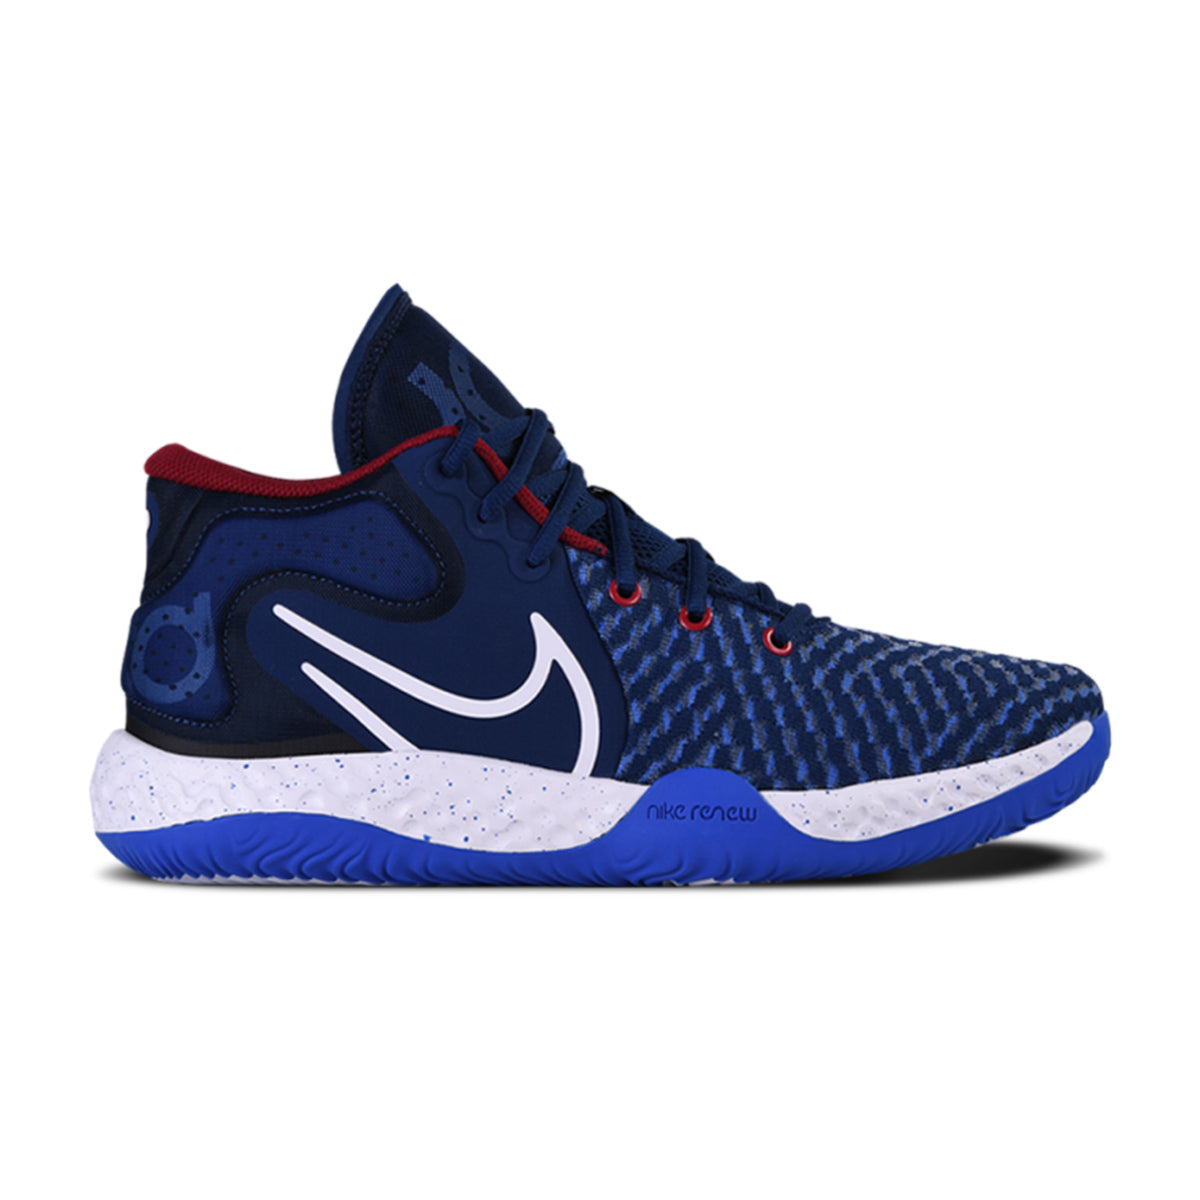 kd basketball shoes blue